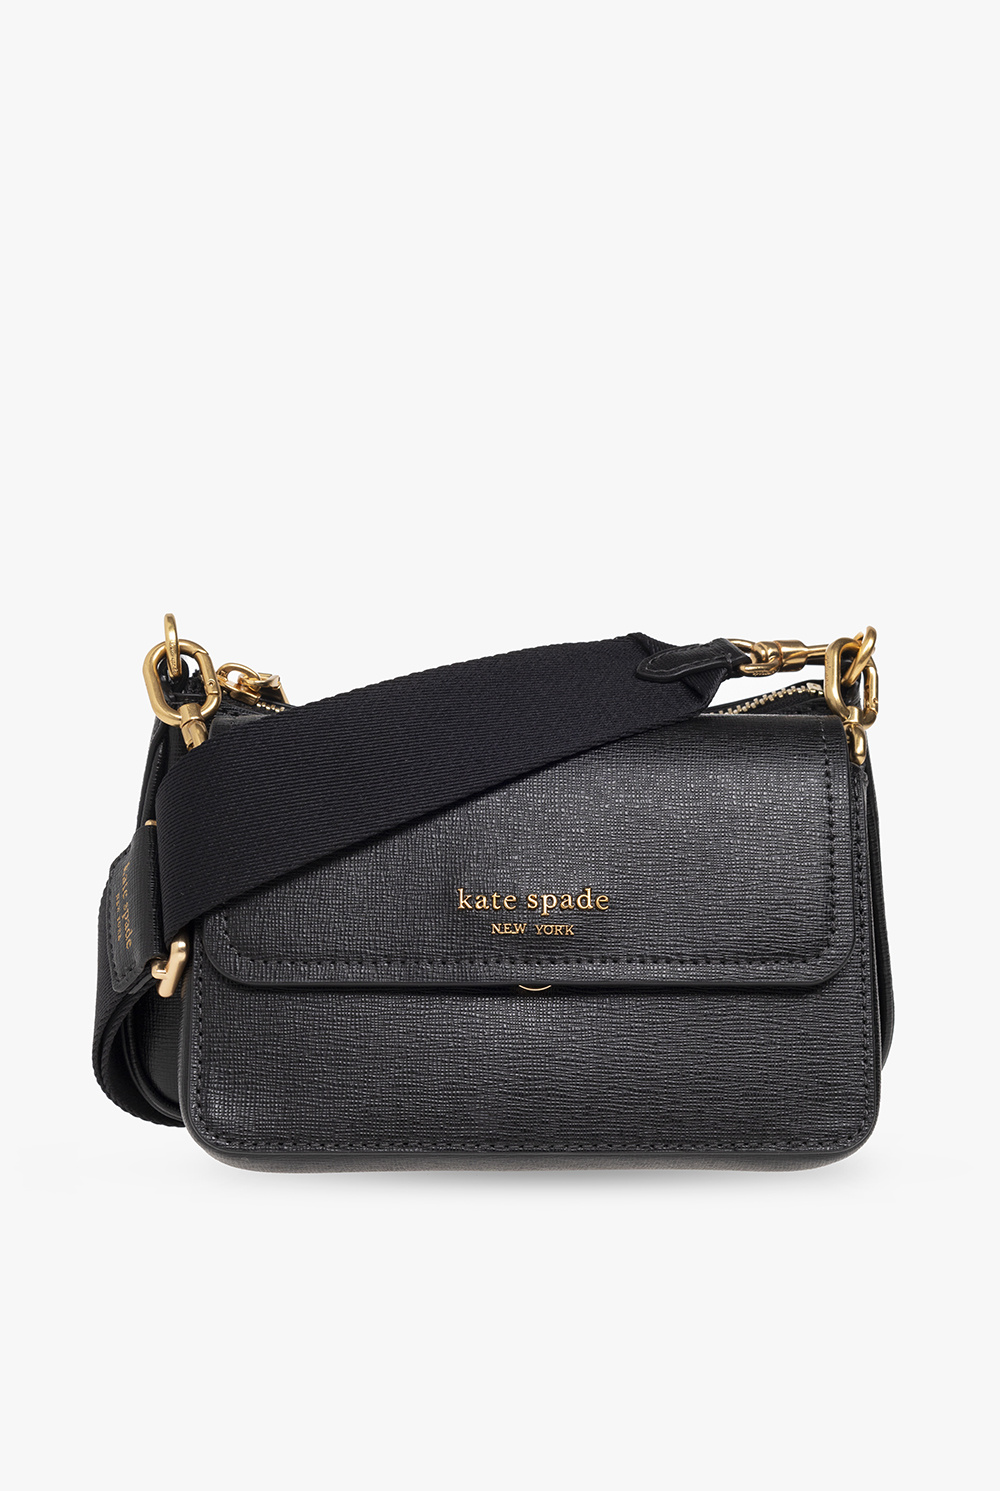 Kate Spade 'Morgan' set of two bags, Women's Bags